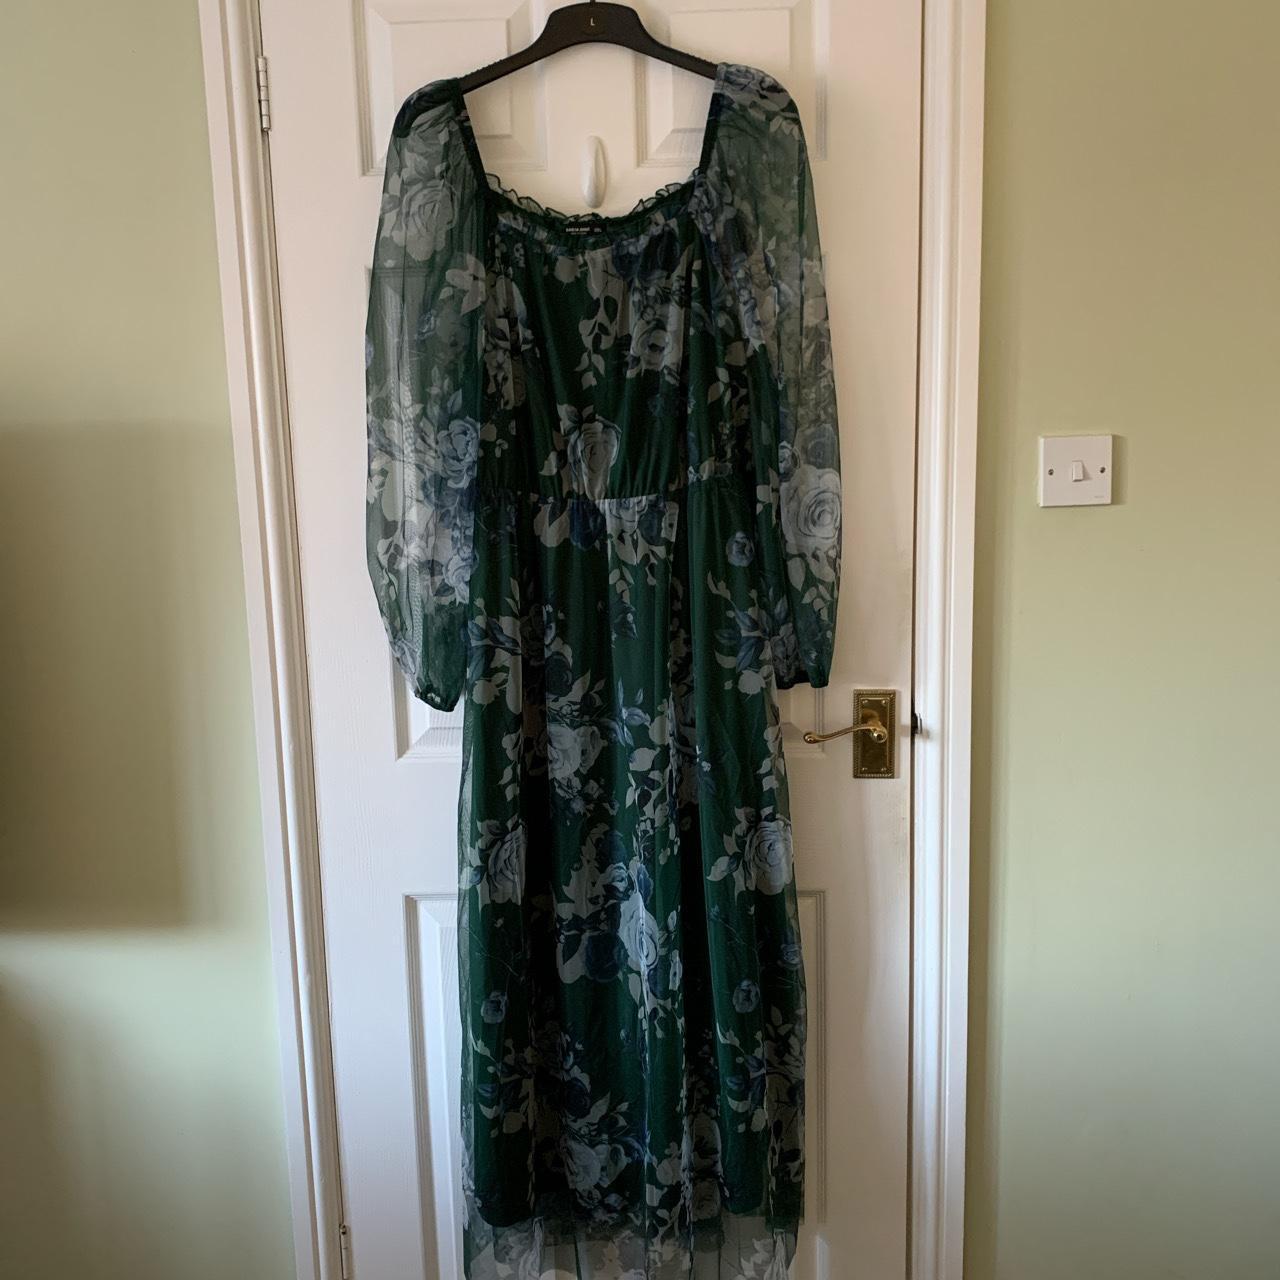 Shein curve maxi dress size 3xl (22). Green with